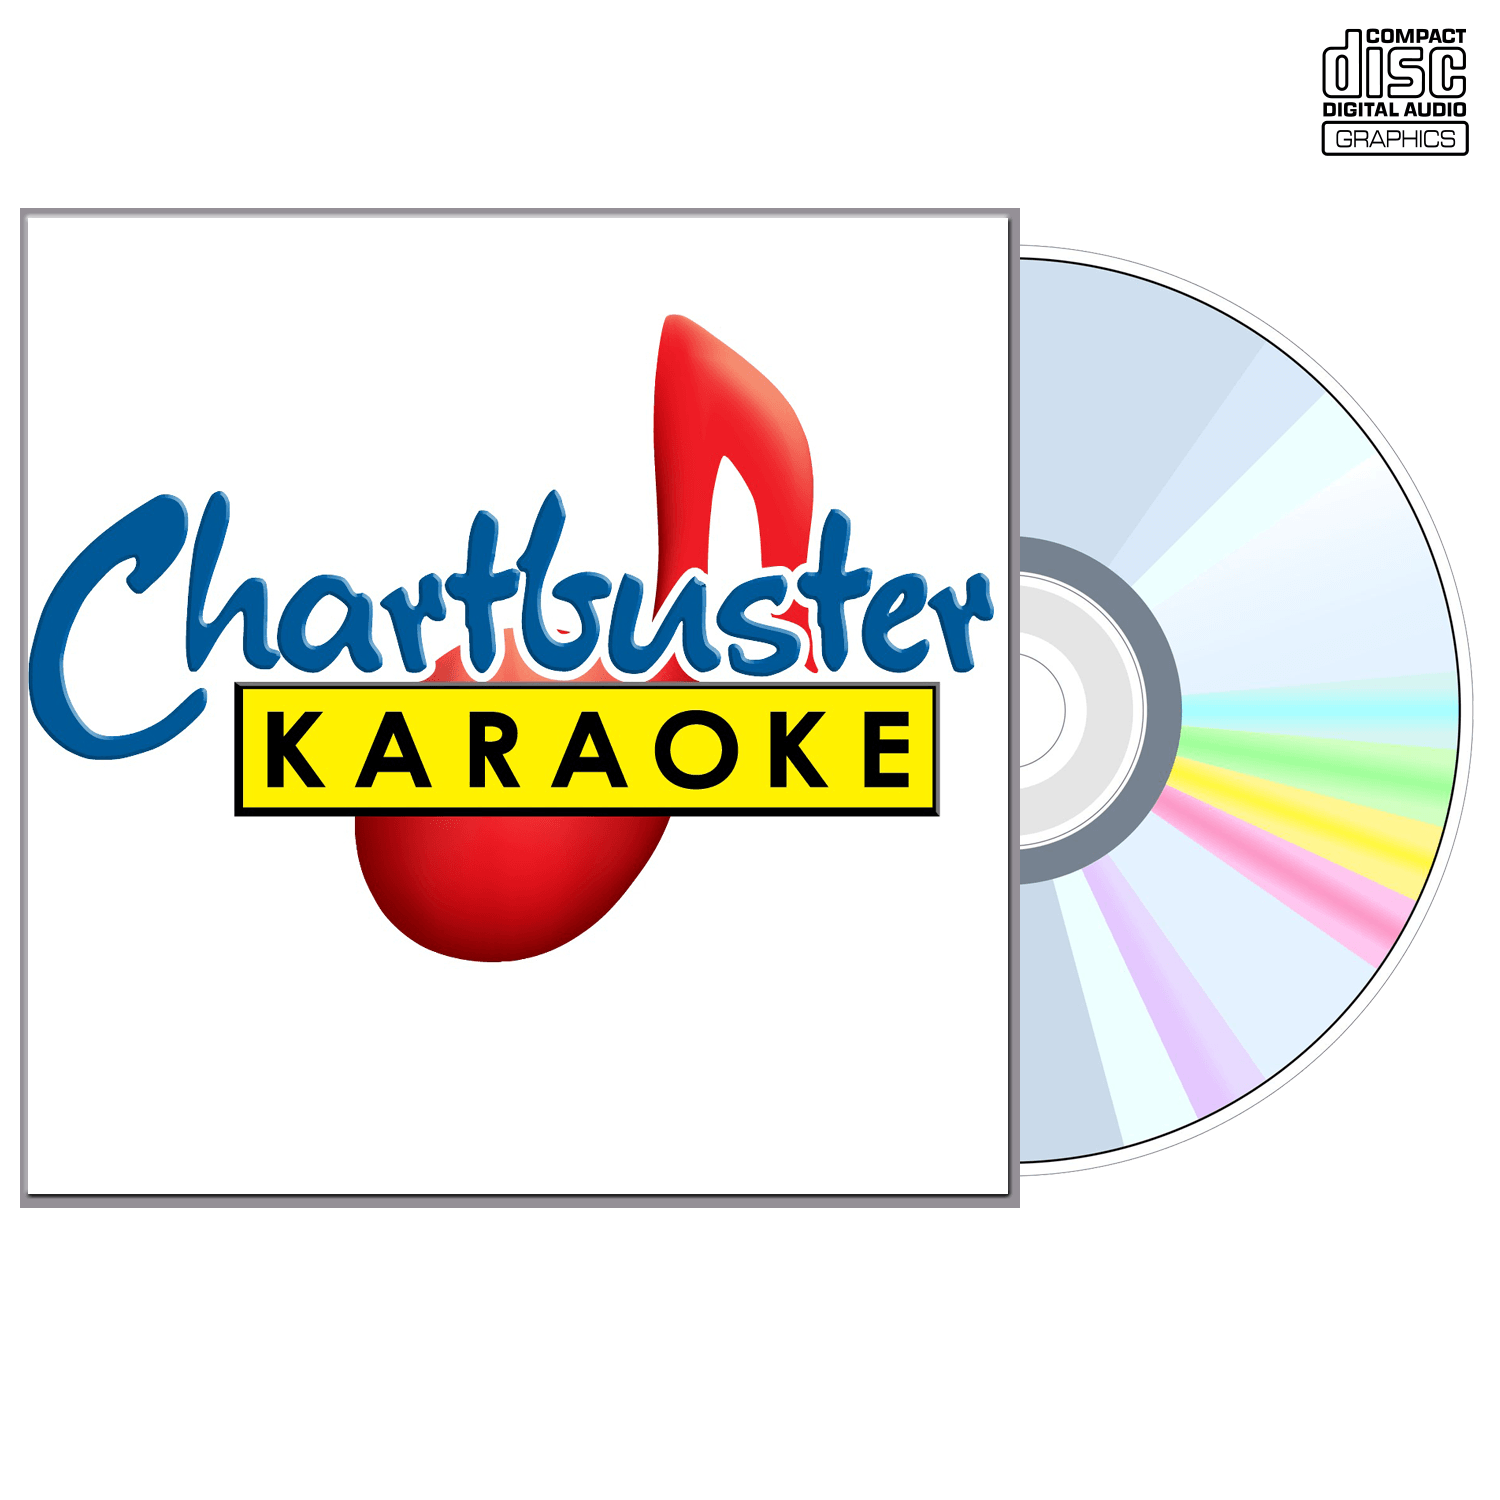 Steve Wariner Vol 2 - CD+G - Chartbuster Karaoke - Karaoke Home Entertainment